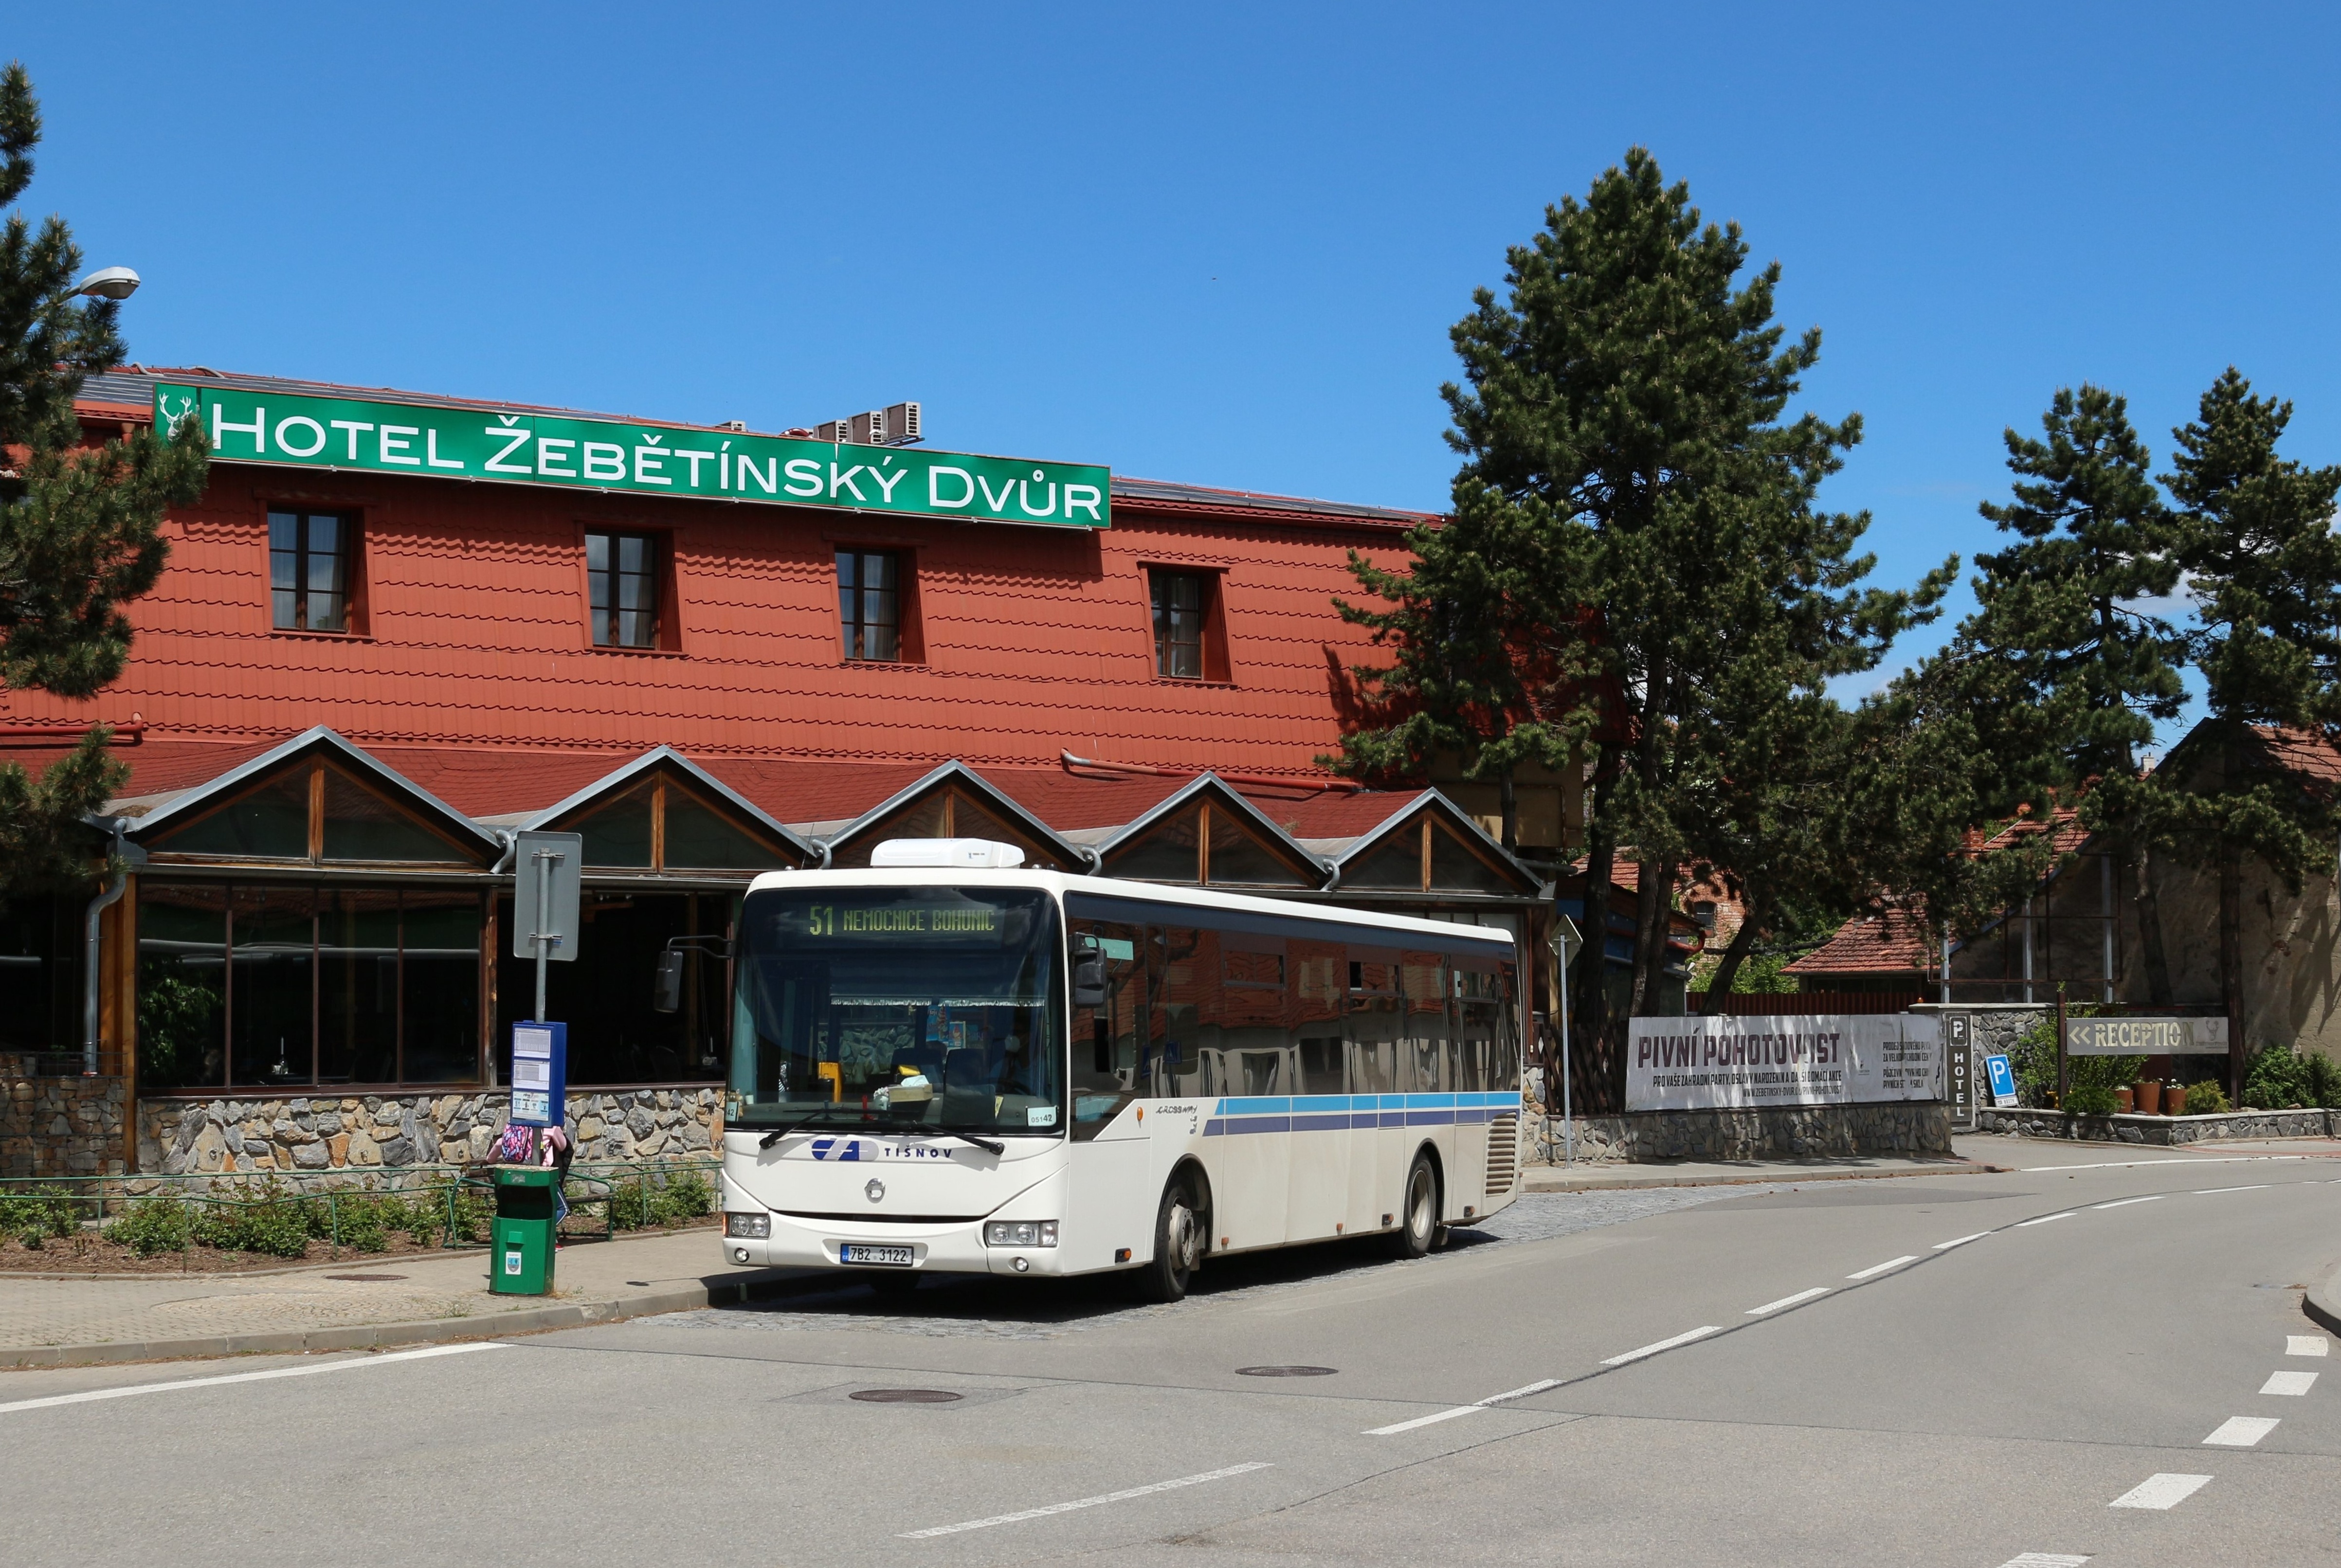 Brno-venkov, Irisbus Crossway LE 12M # 7B2 3122